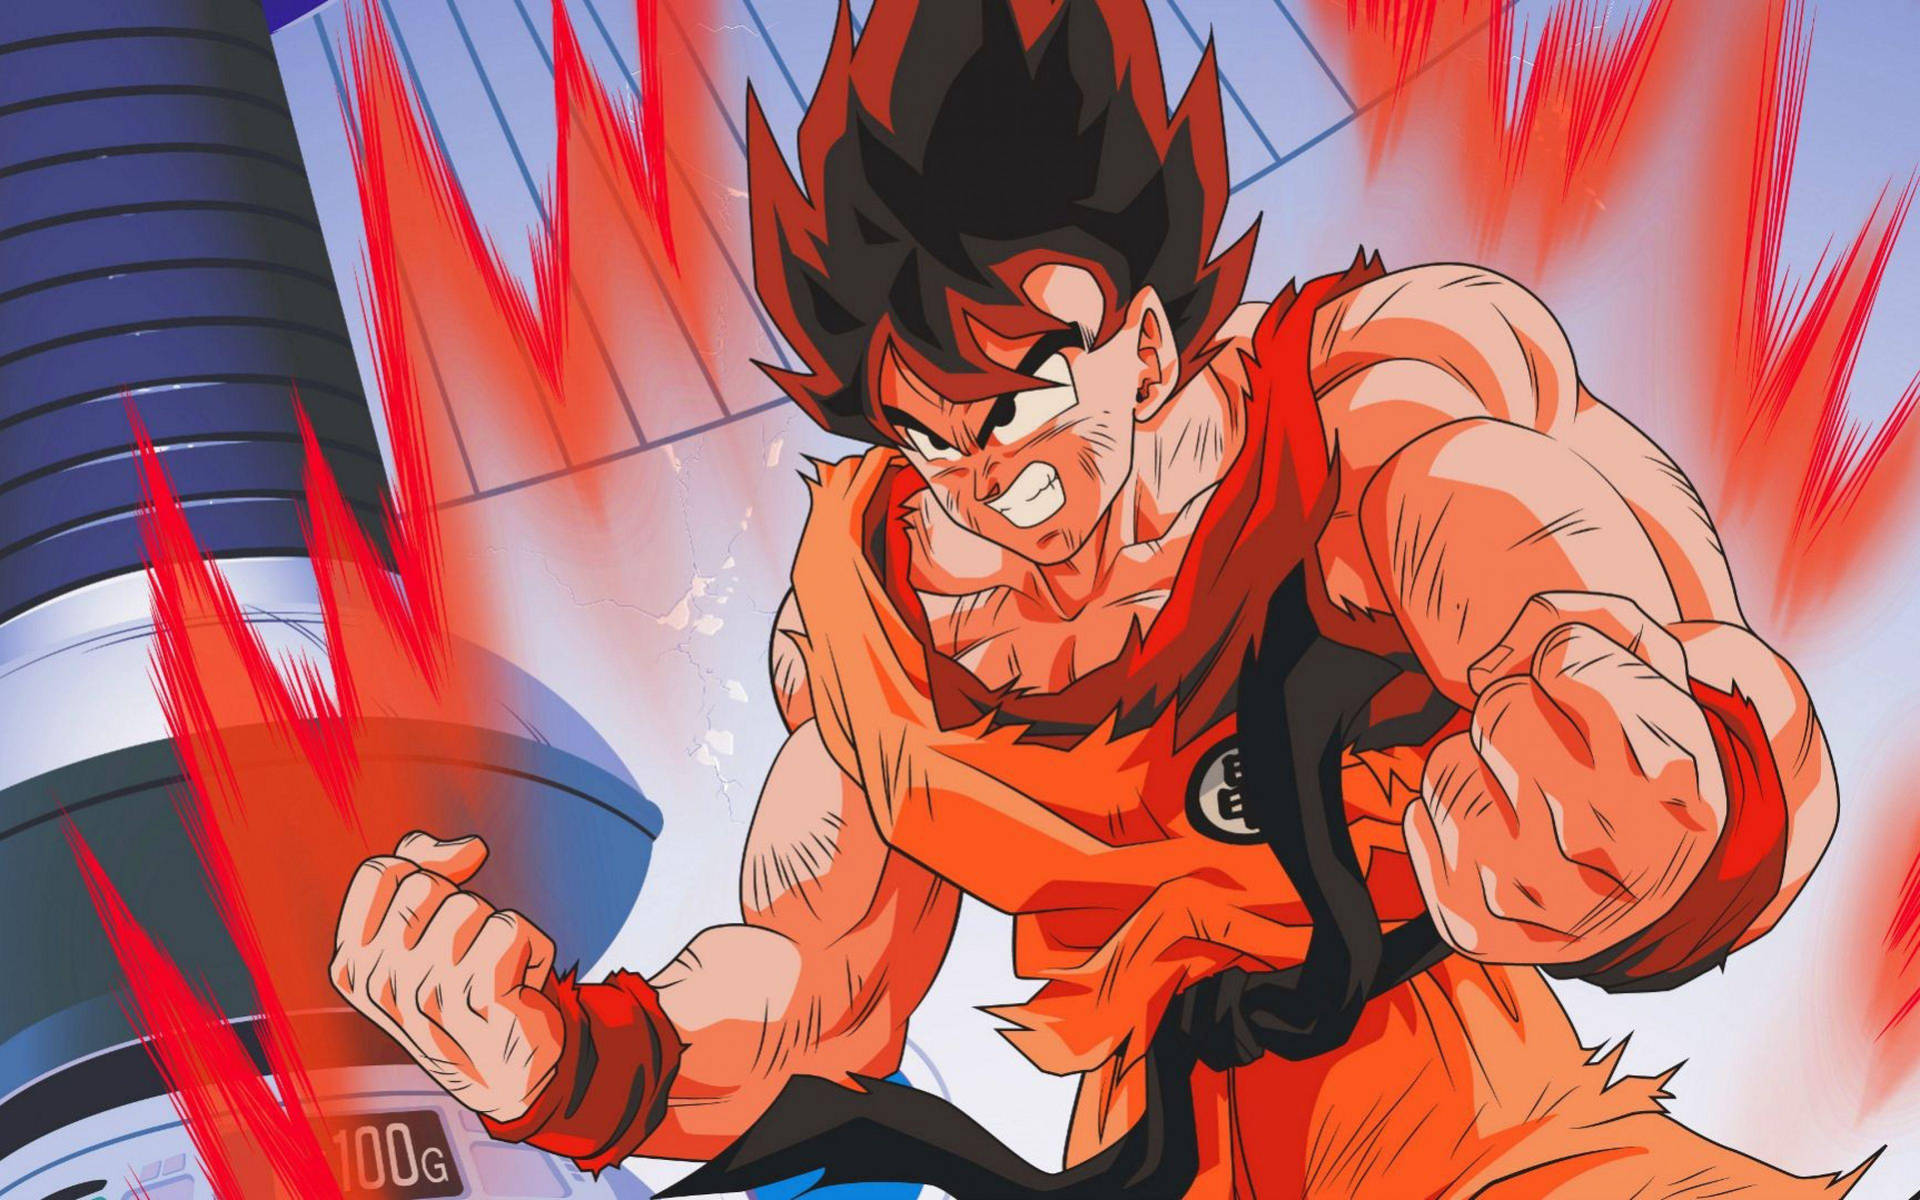 “Goku of Dragon Ball Super unleashing his Kamehameha attack!” Wallpaper